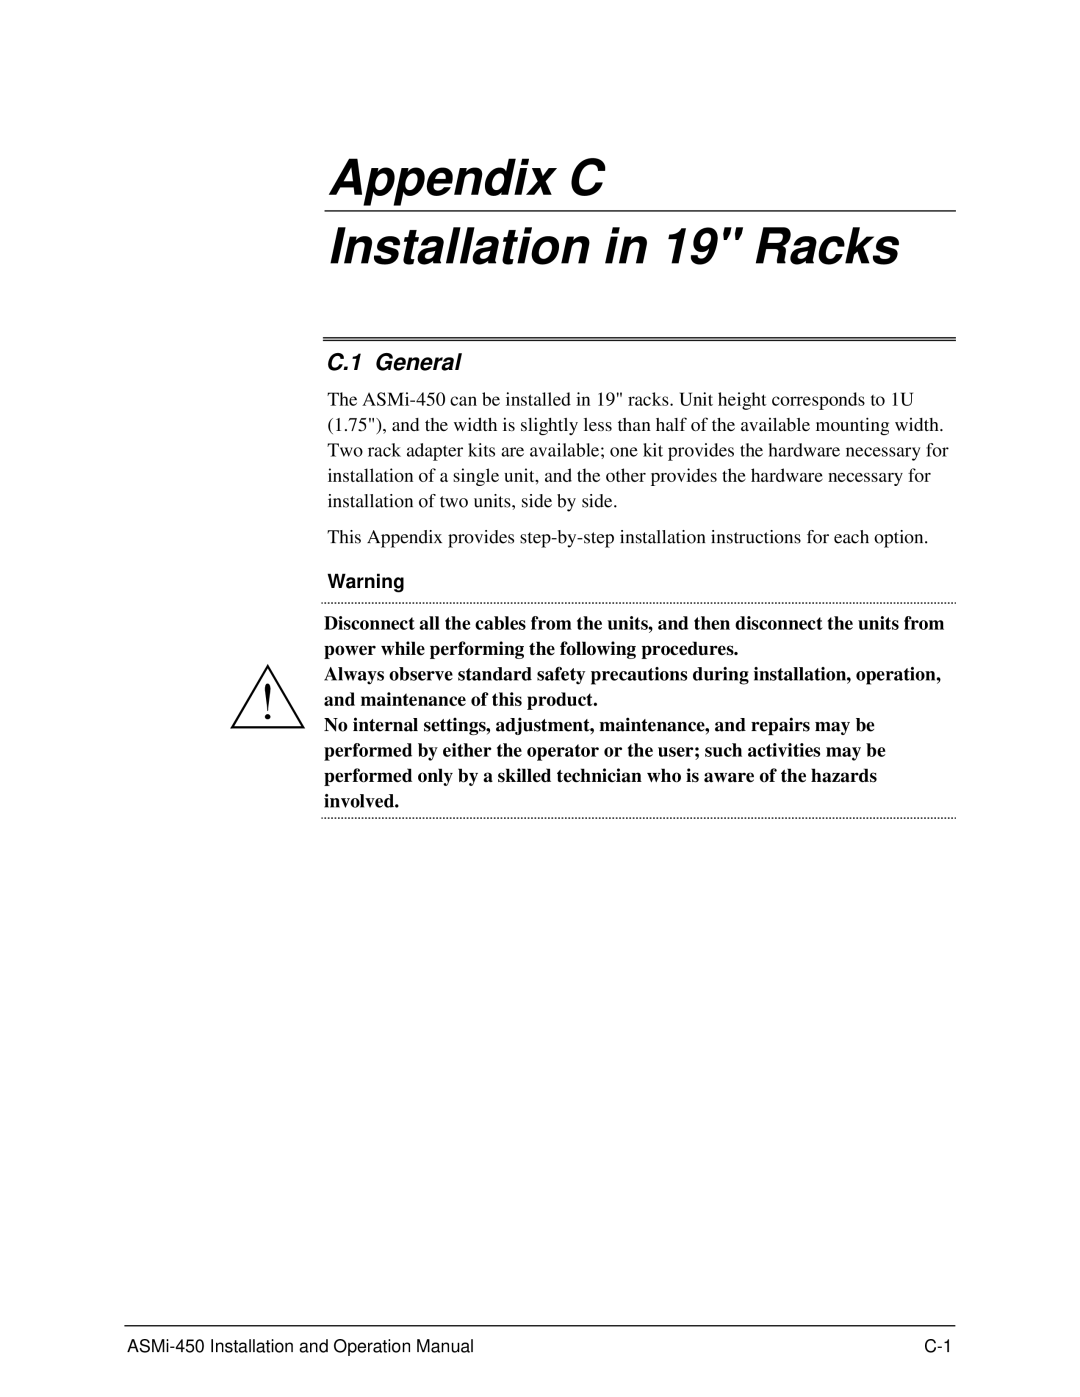 RAD Data comm ASMI-450 operation manual Appendix C Installation in 19 Racks, C.1 General 